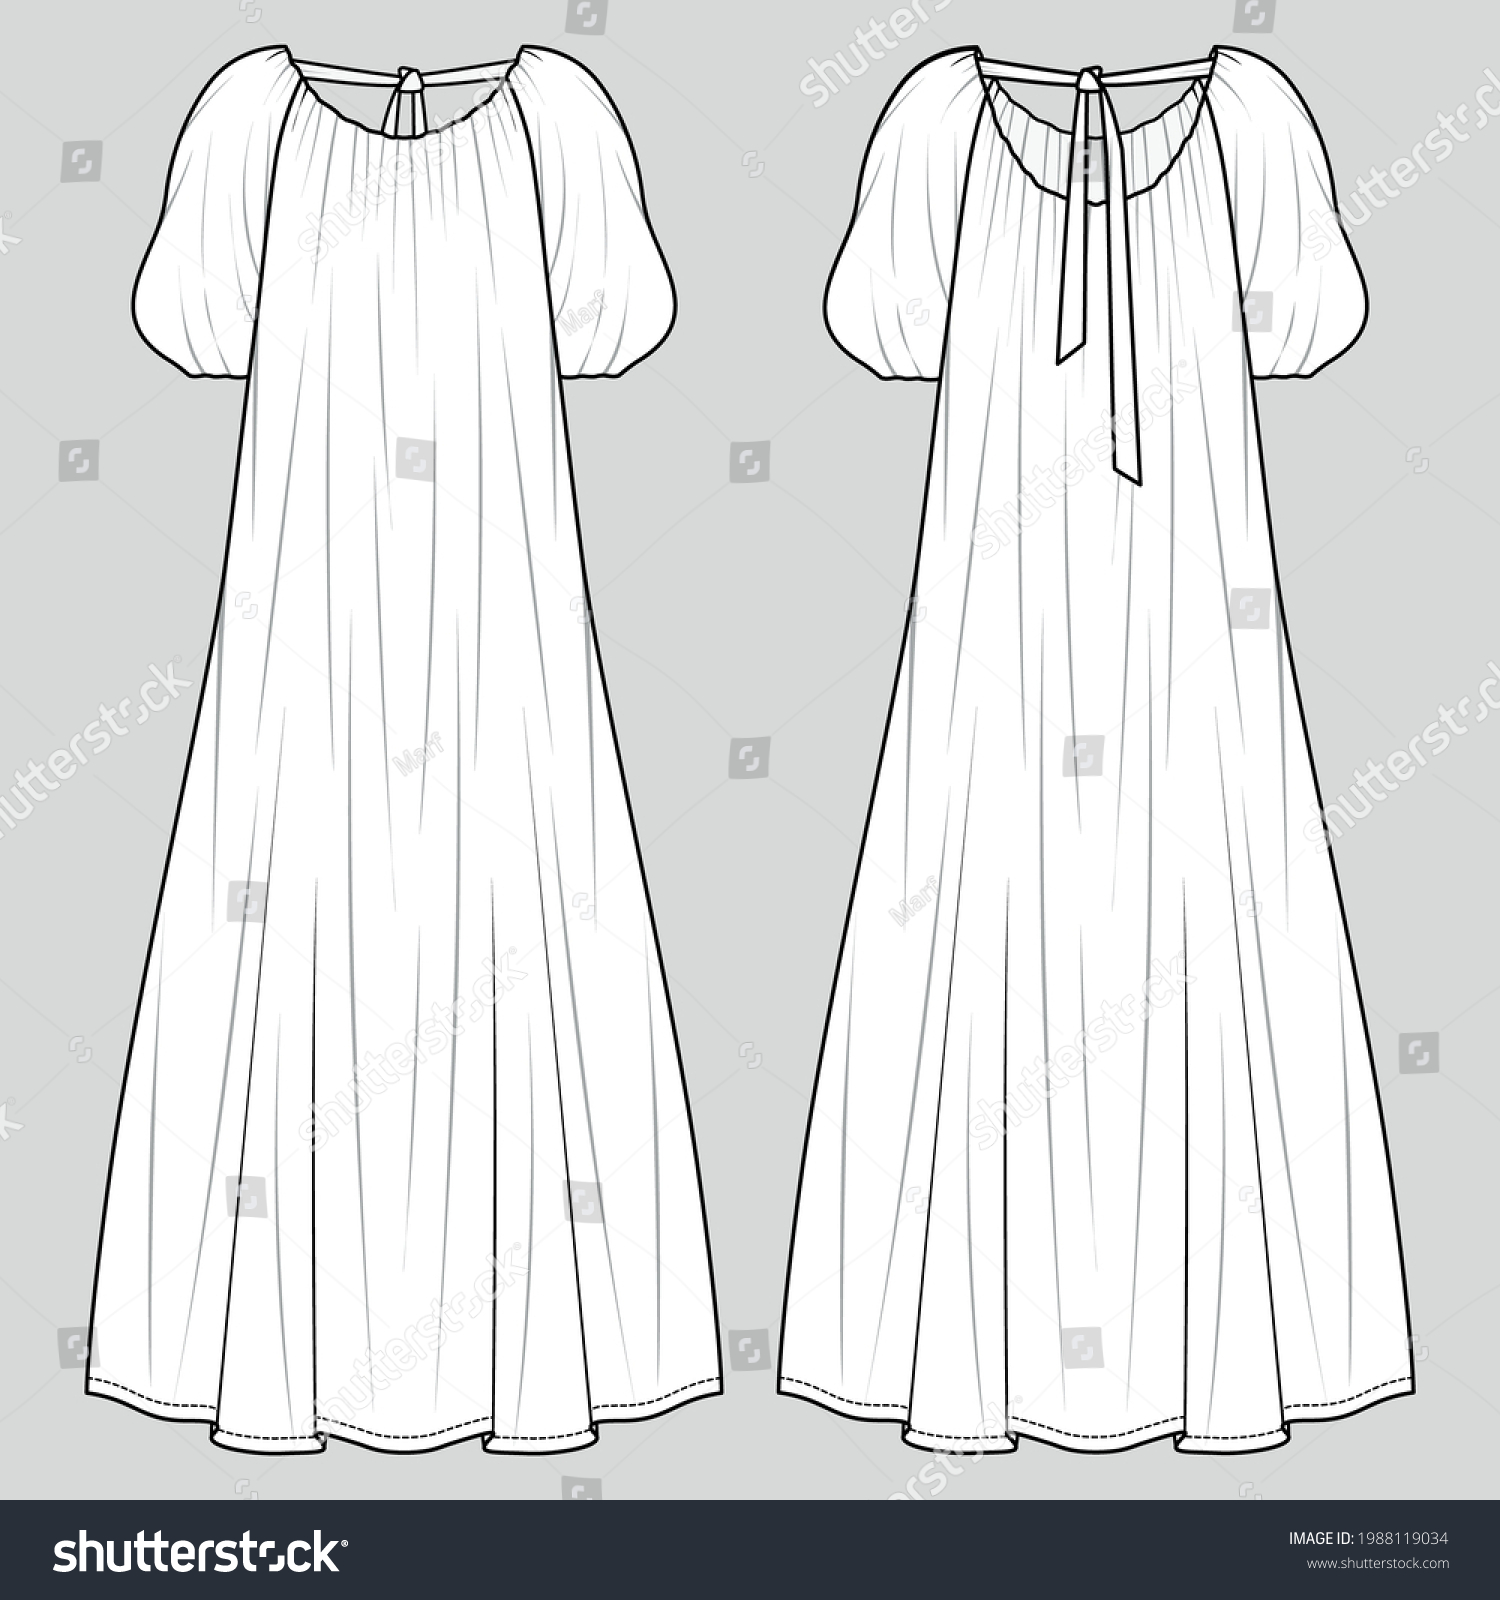 2,716 Kaftan dress Images, Stock Photos & Vectors | Shutterstock